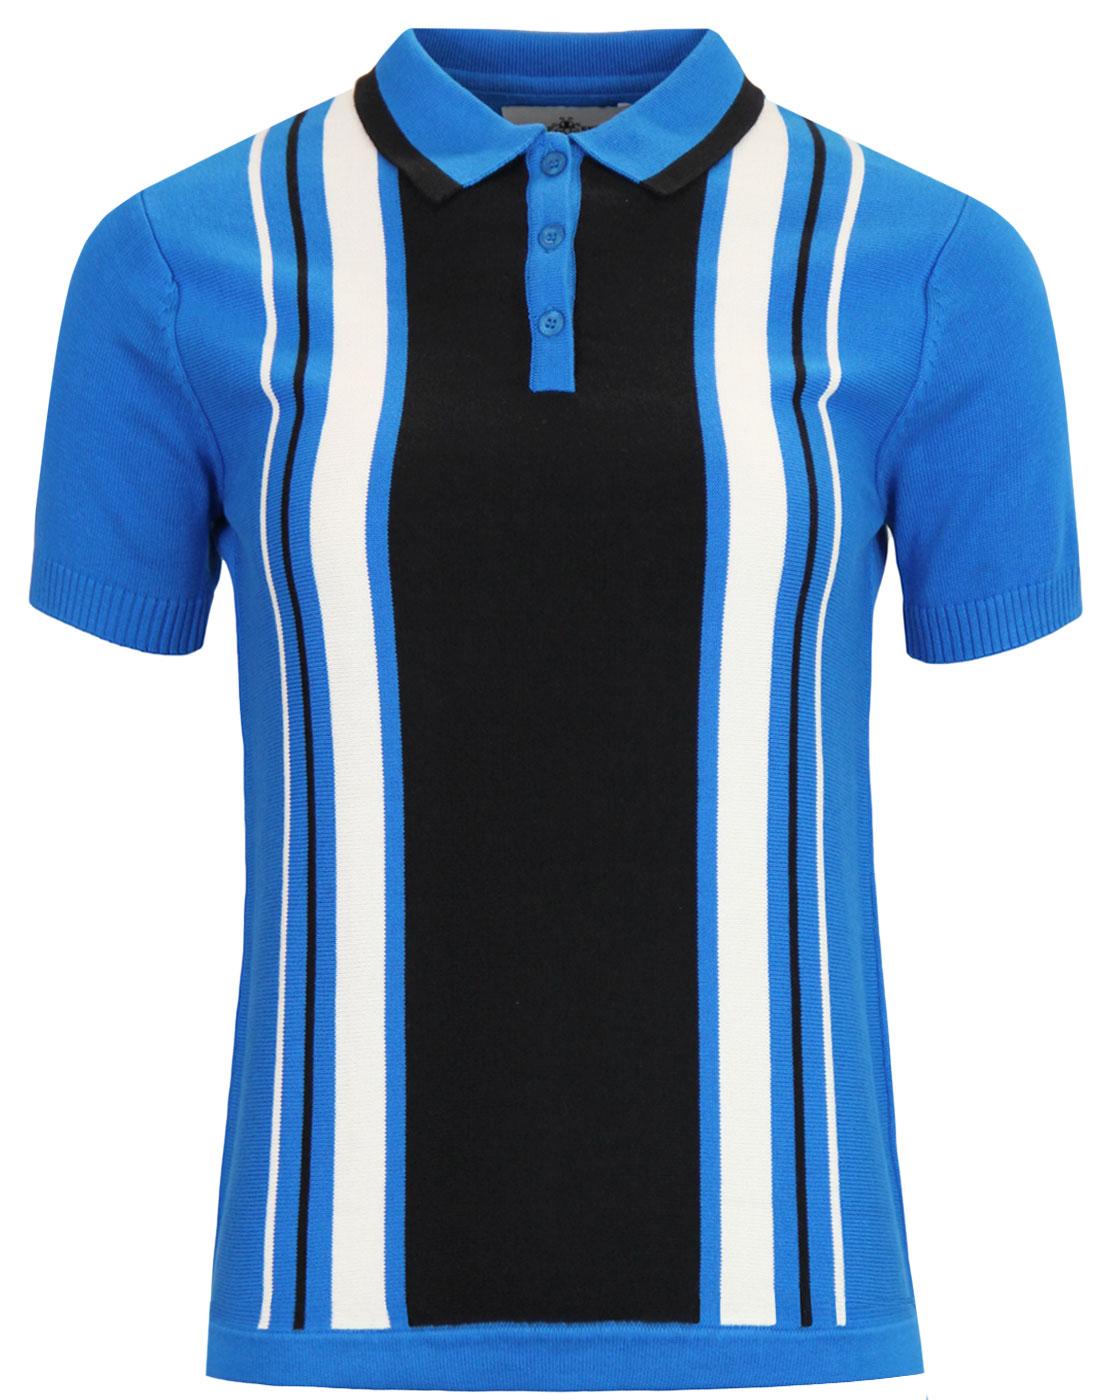 MADCAP ENGLAND Fable 60s Mod Stripe Knit Polo Top Blue